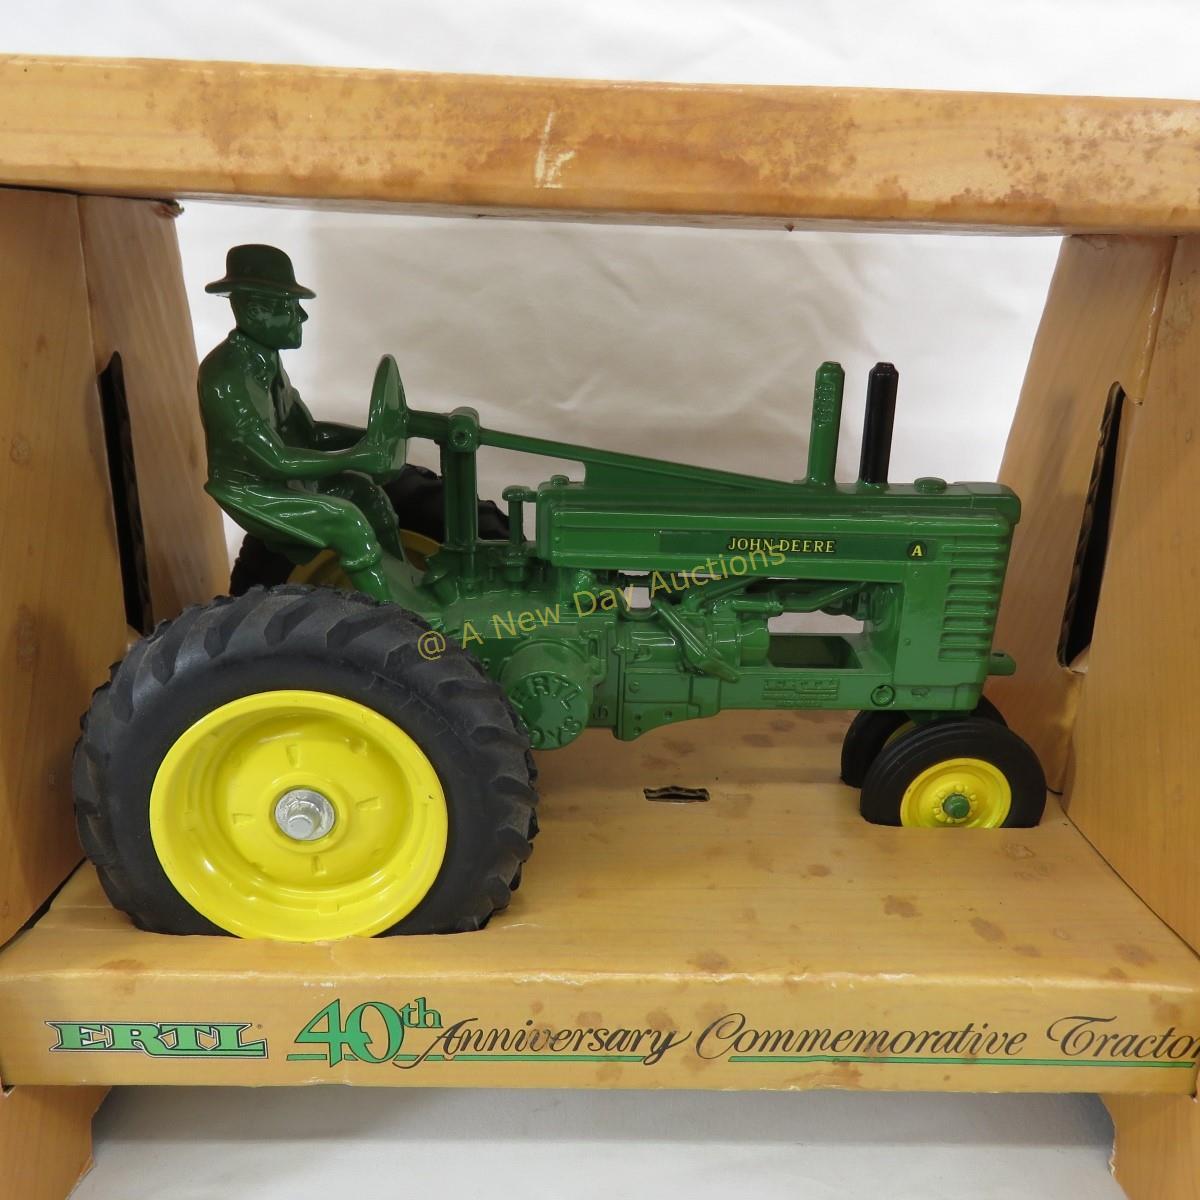 Ertl 40th anniv commemorative John Deere tractor